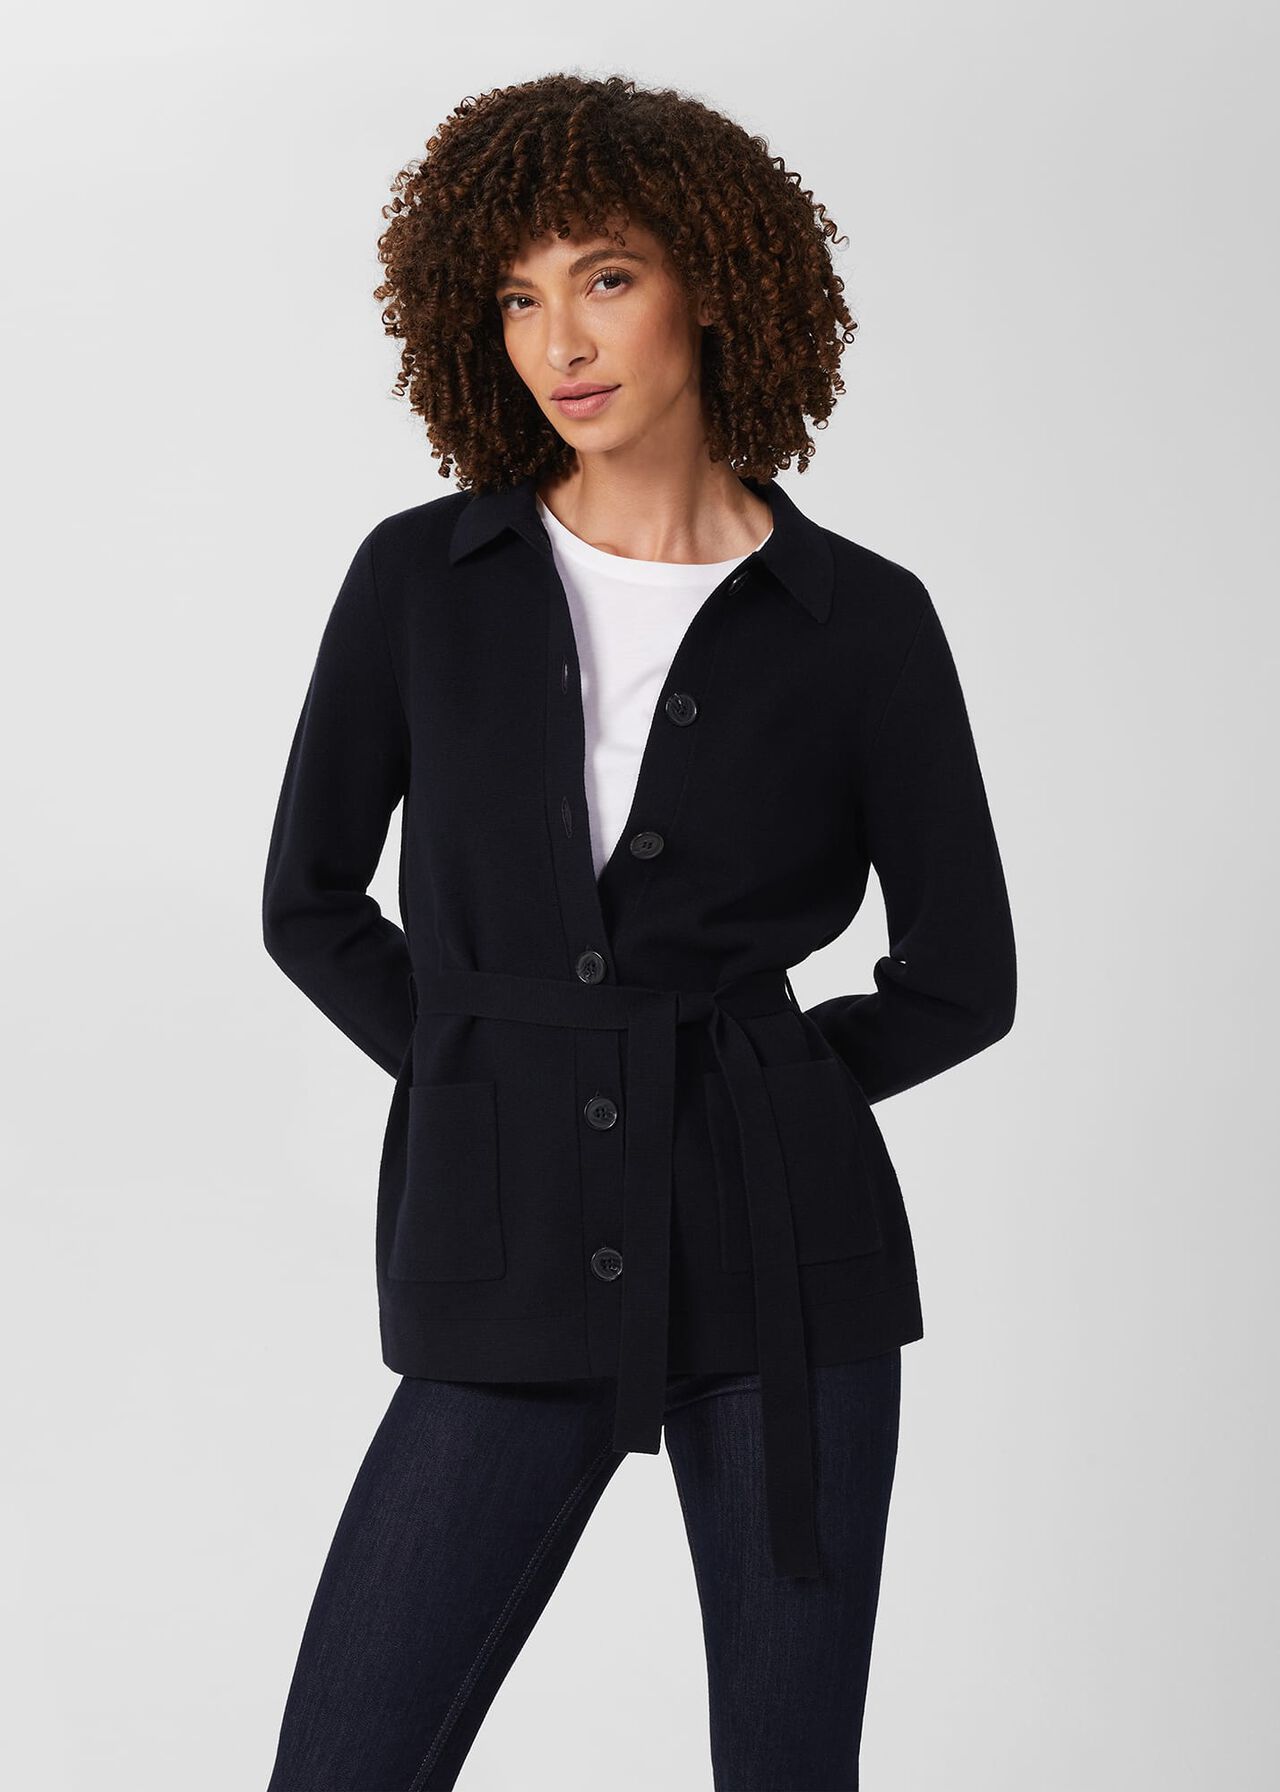 Paloma Cotton Wool Knitted Jacket, Navy, hi-res